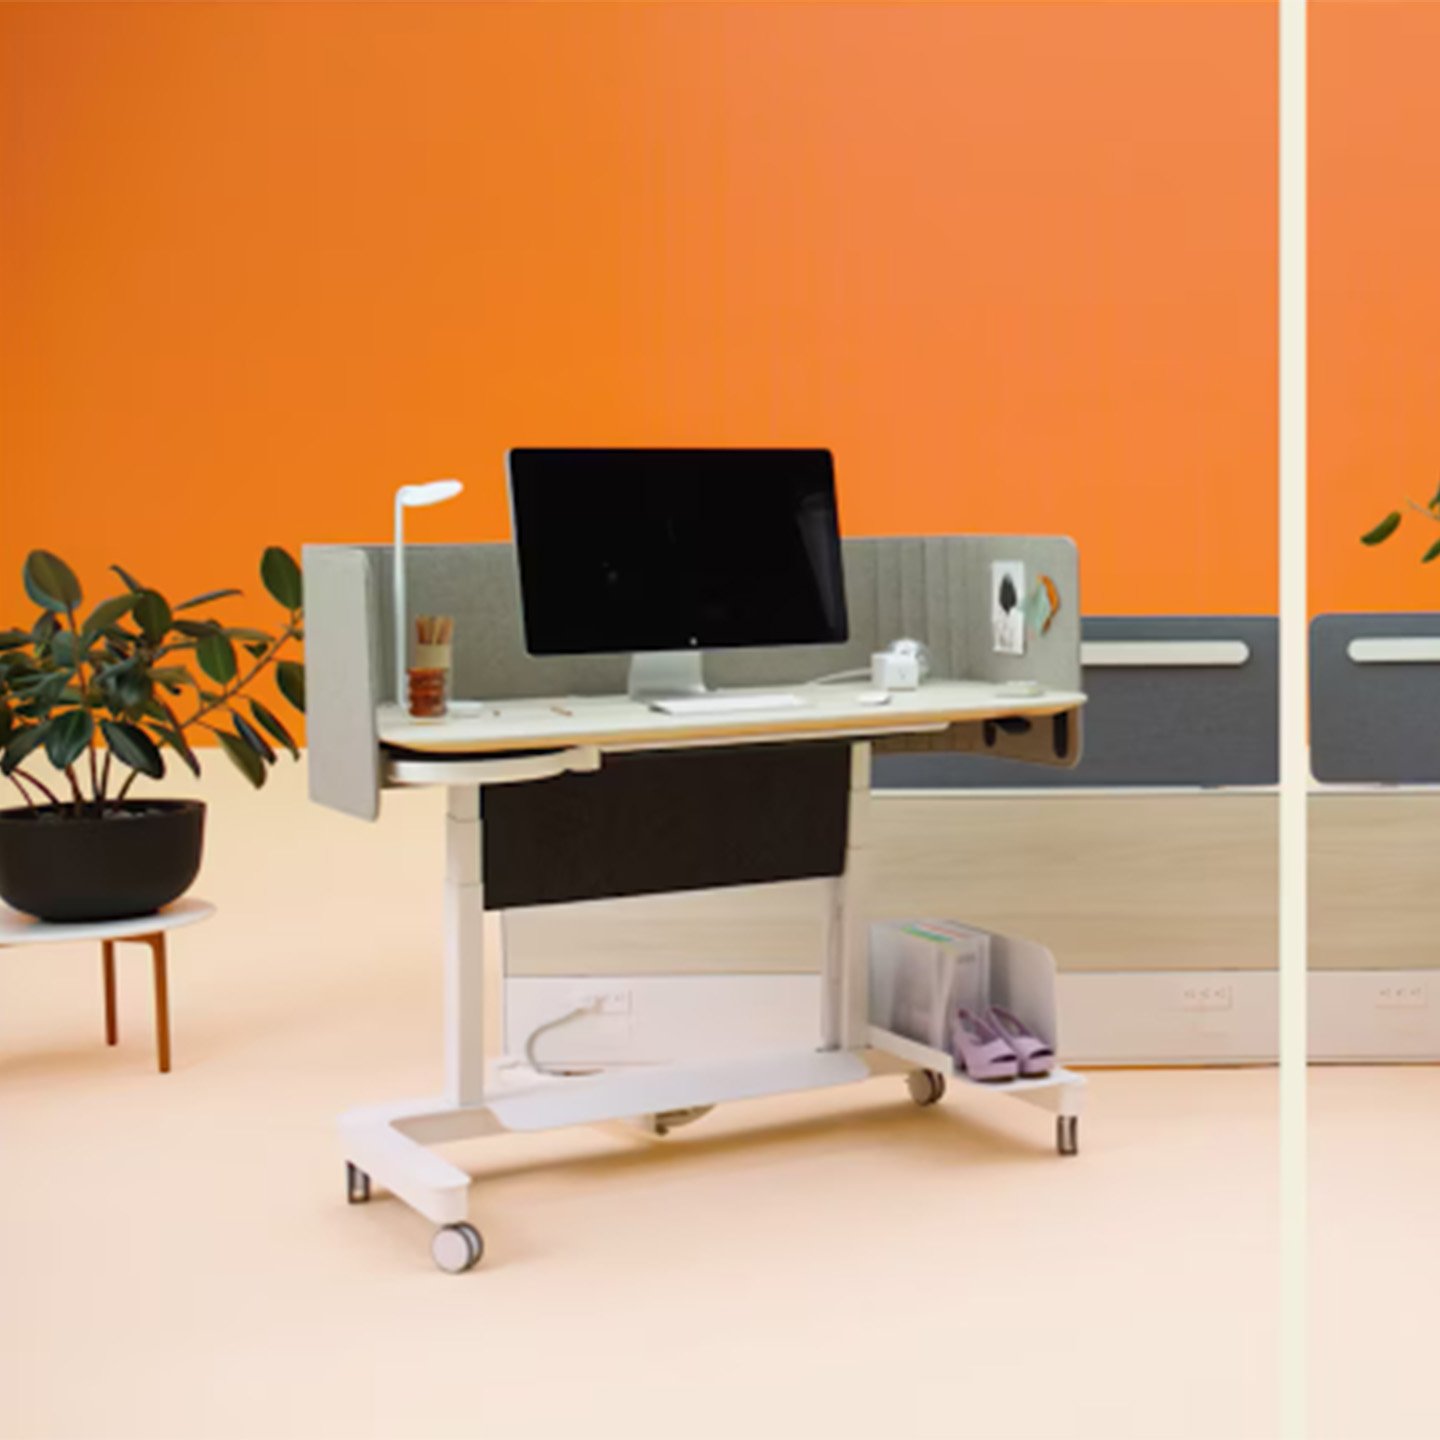 Haworth Compose Echo workspaces against an orange background